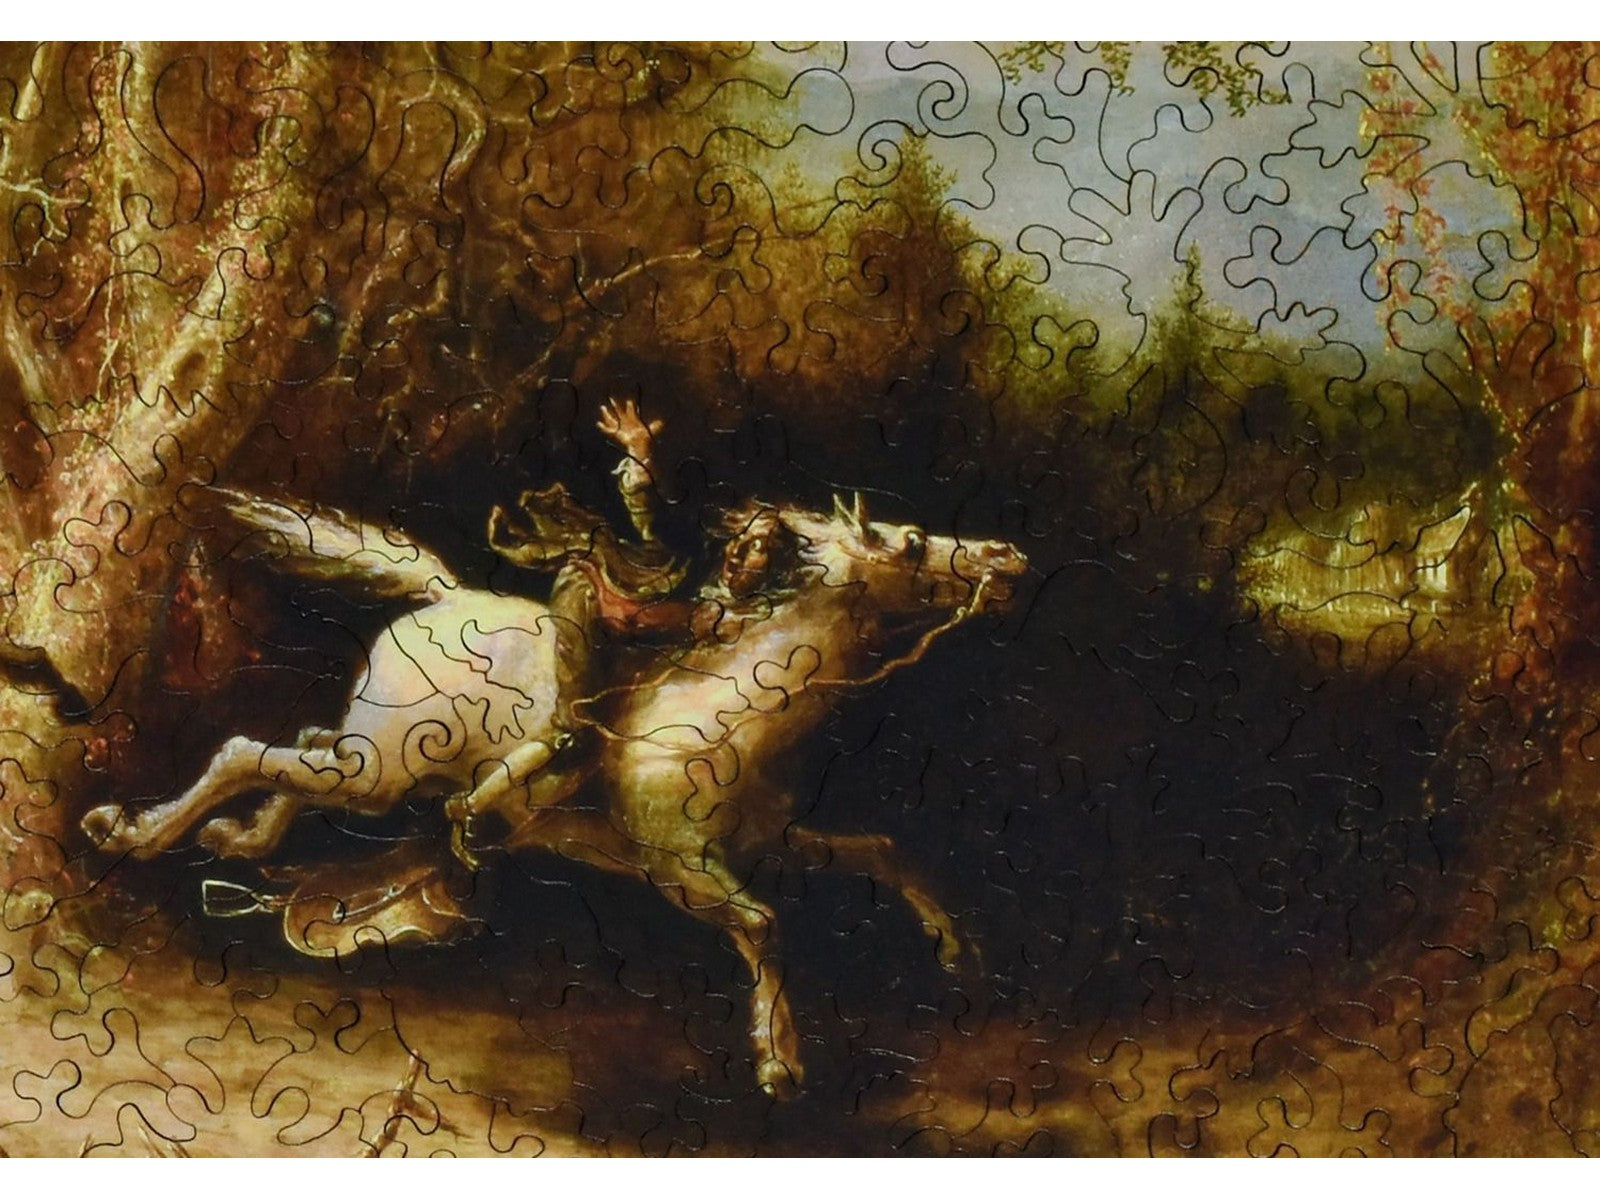 headless horseman painting